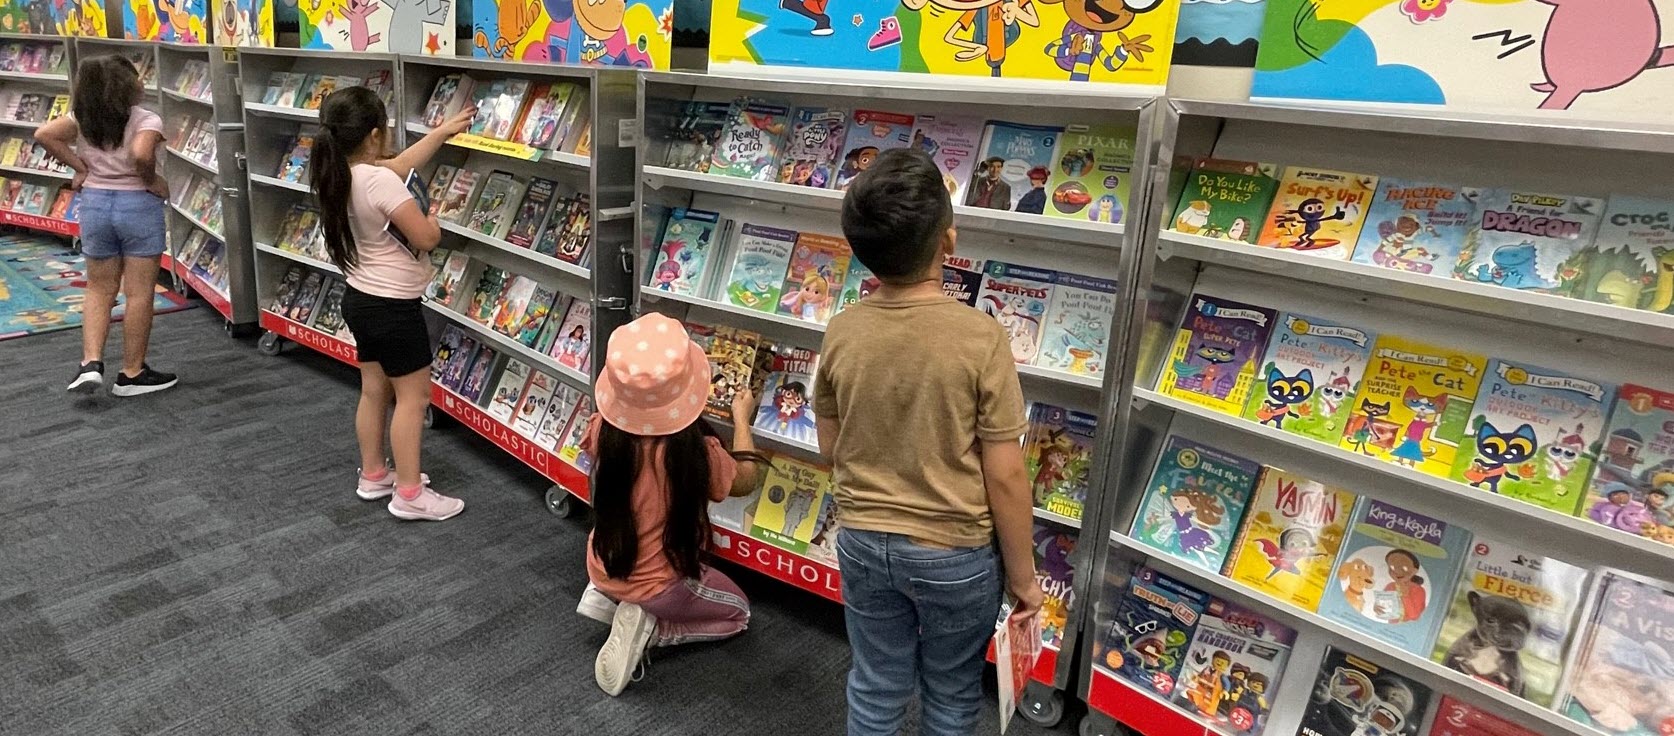 Scholastic Book Fairs help Nevada children grow as readers